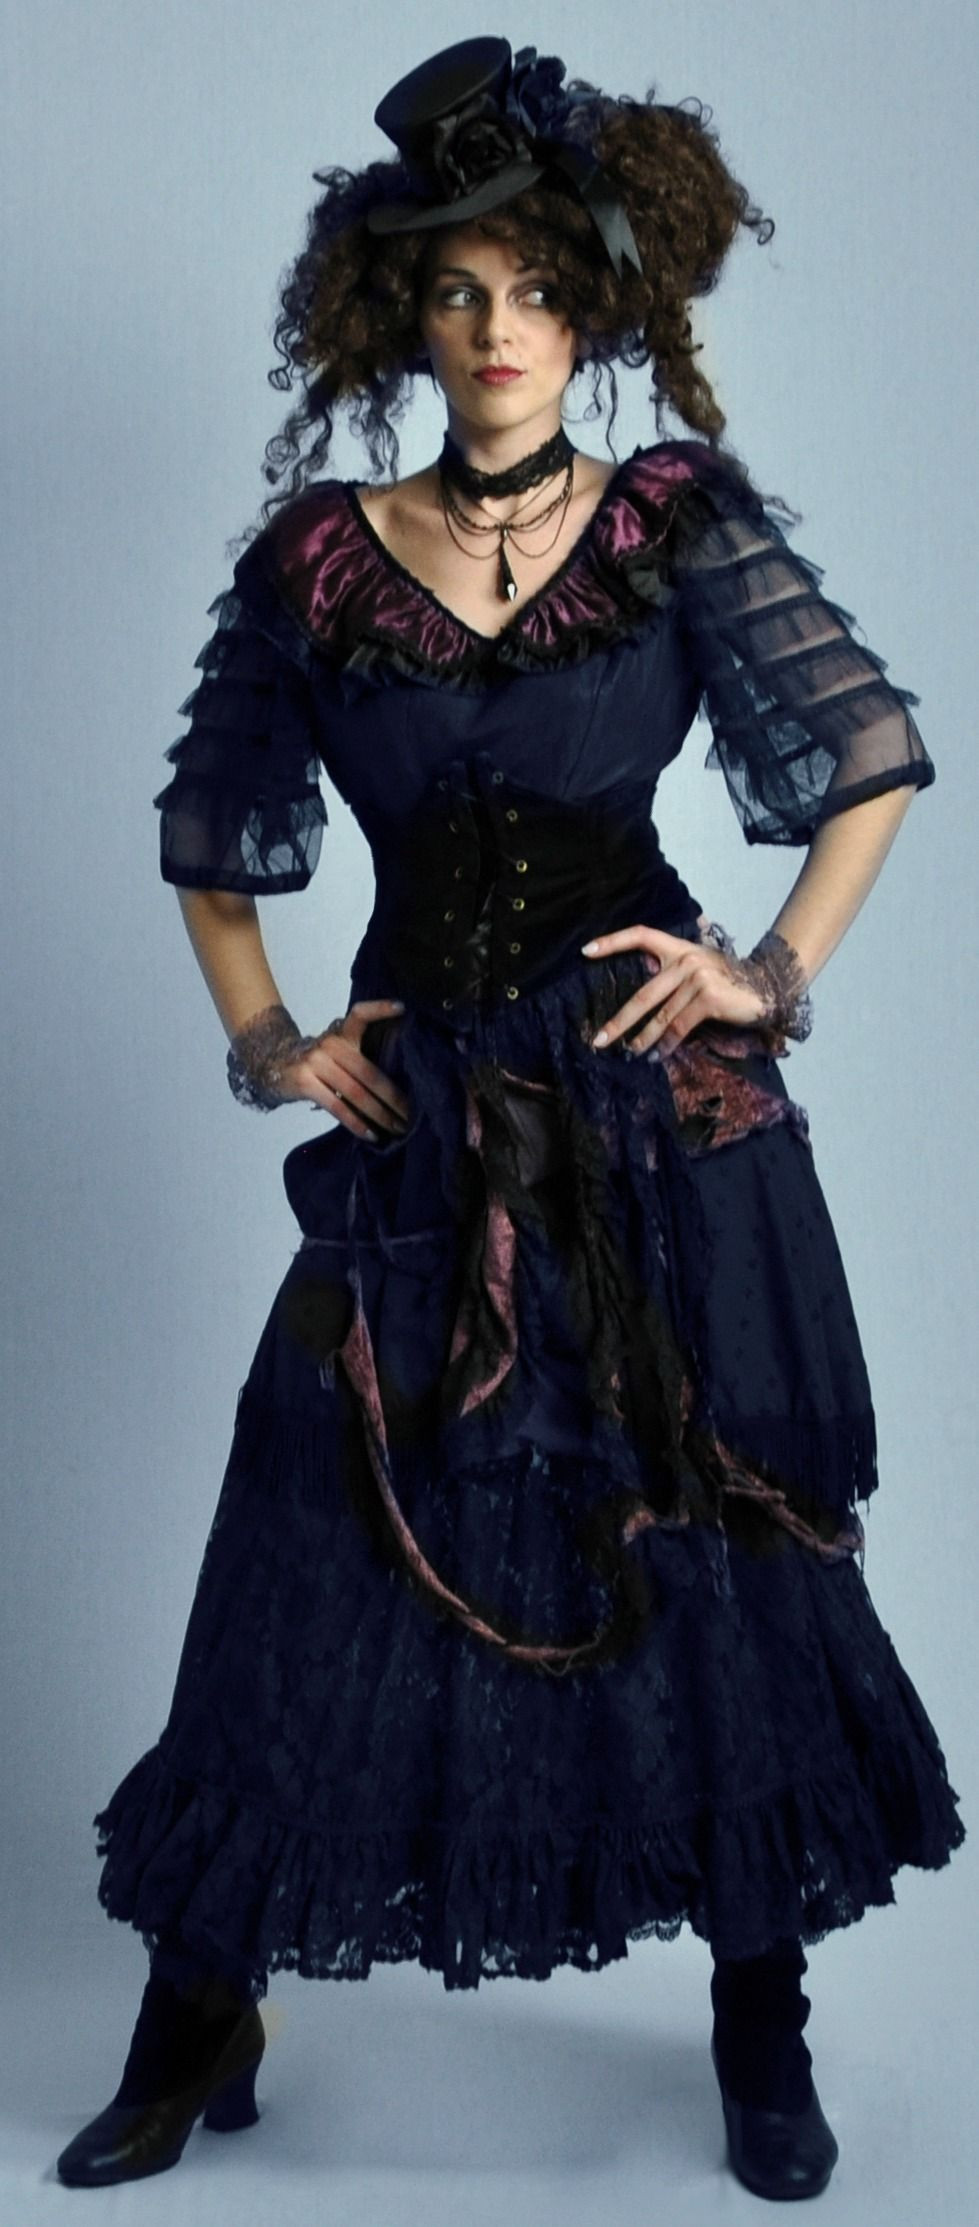 Best ideas about Mrs Lovett Costume DIY
. Save or Pin Mrs Lovett costume The Costume Shop Melbourne Now.